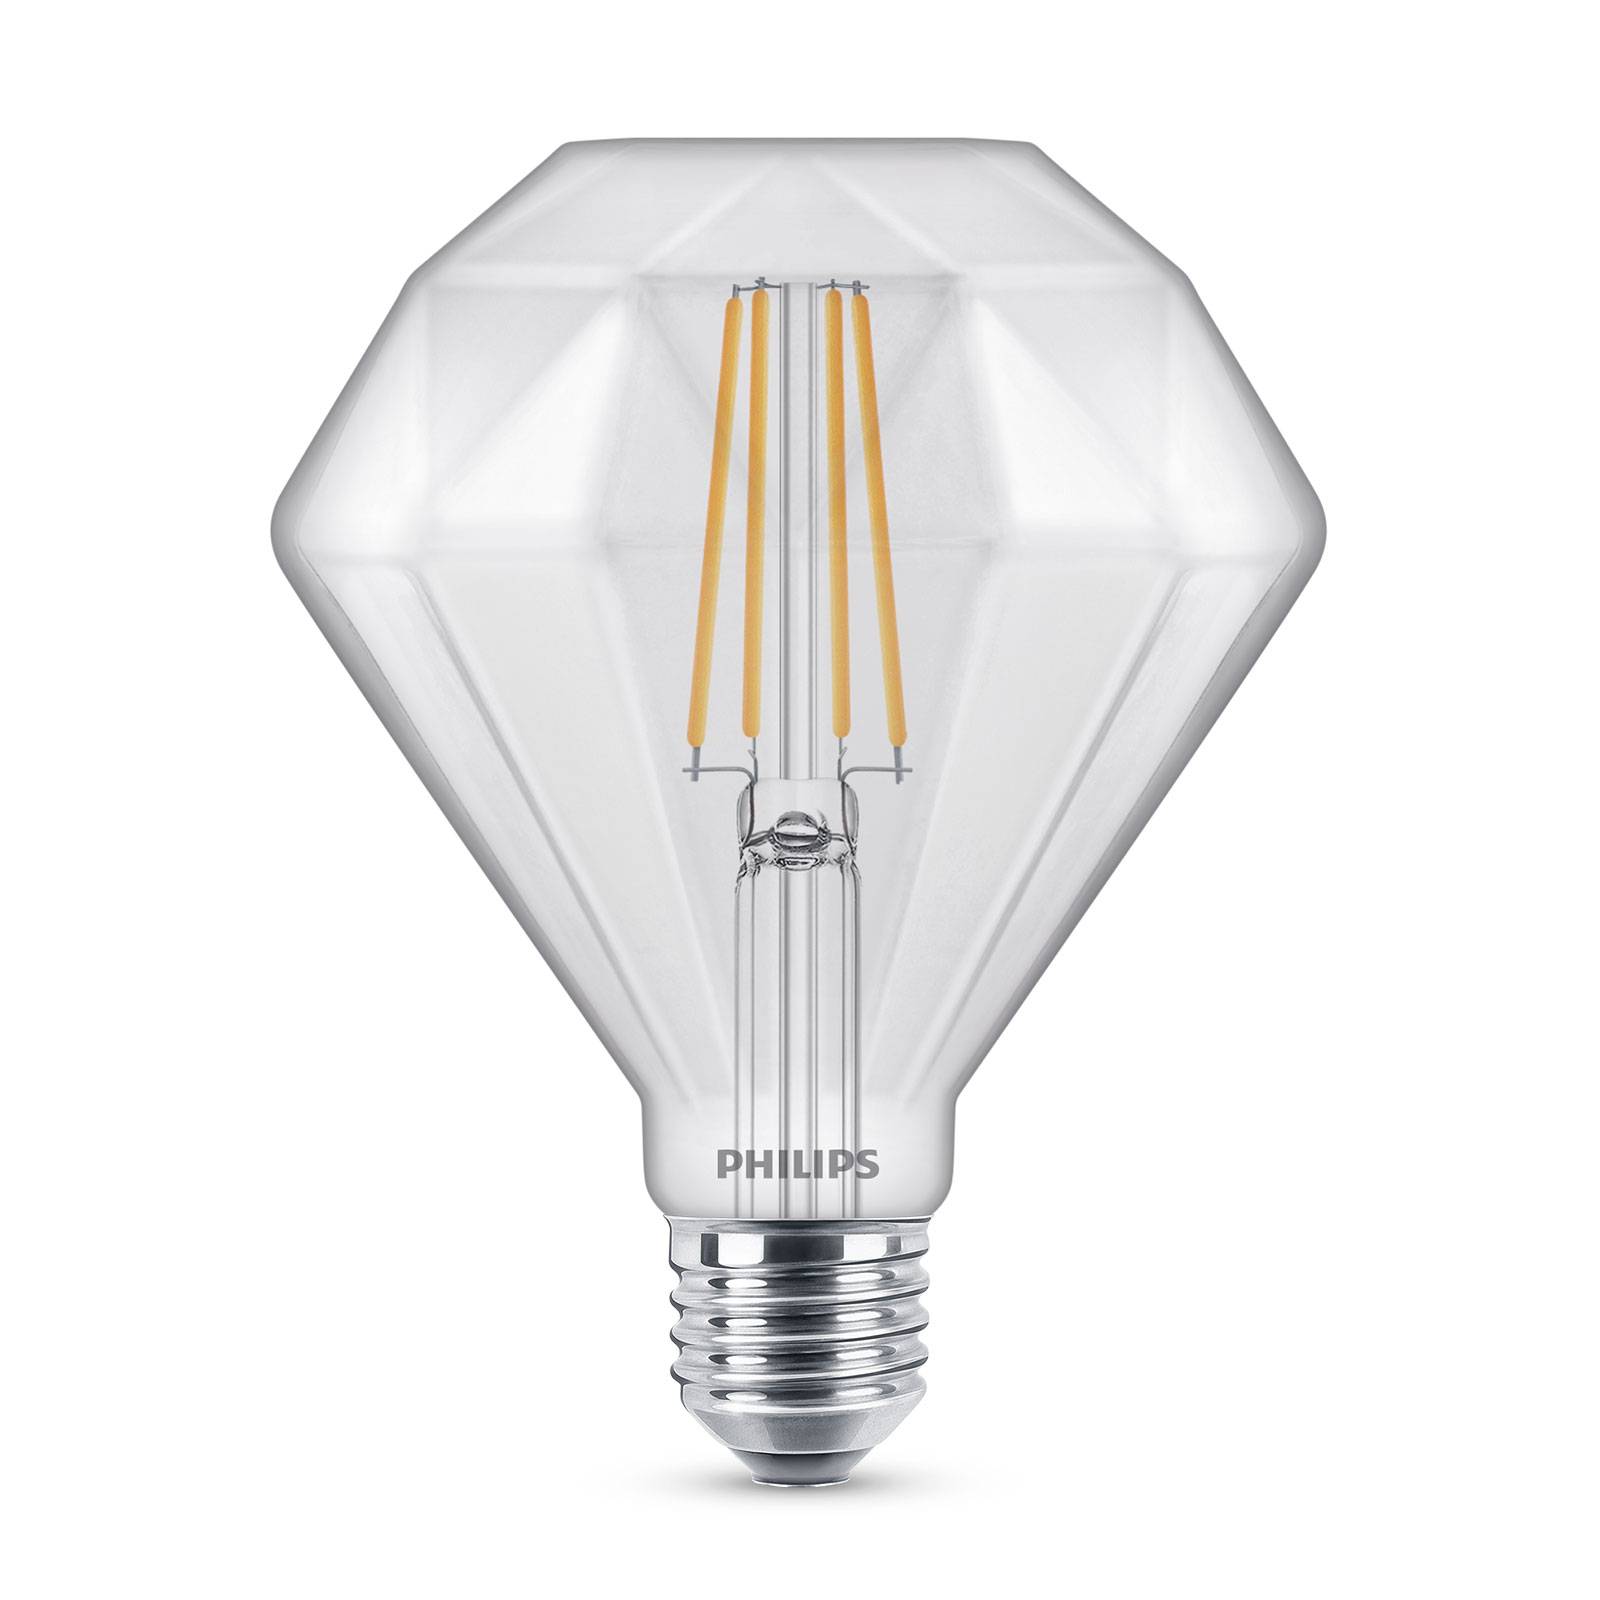 Bermad tweeling Farmacologie Philips Classic Diamond LED lamp E27 5W | Lampen24.nl